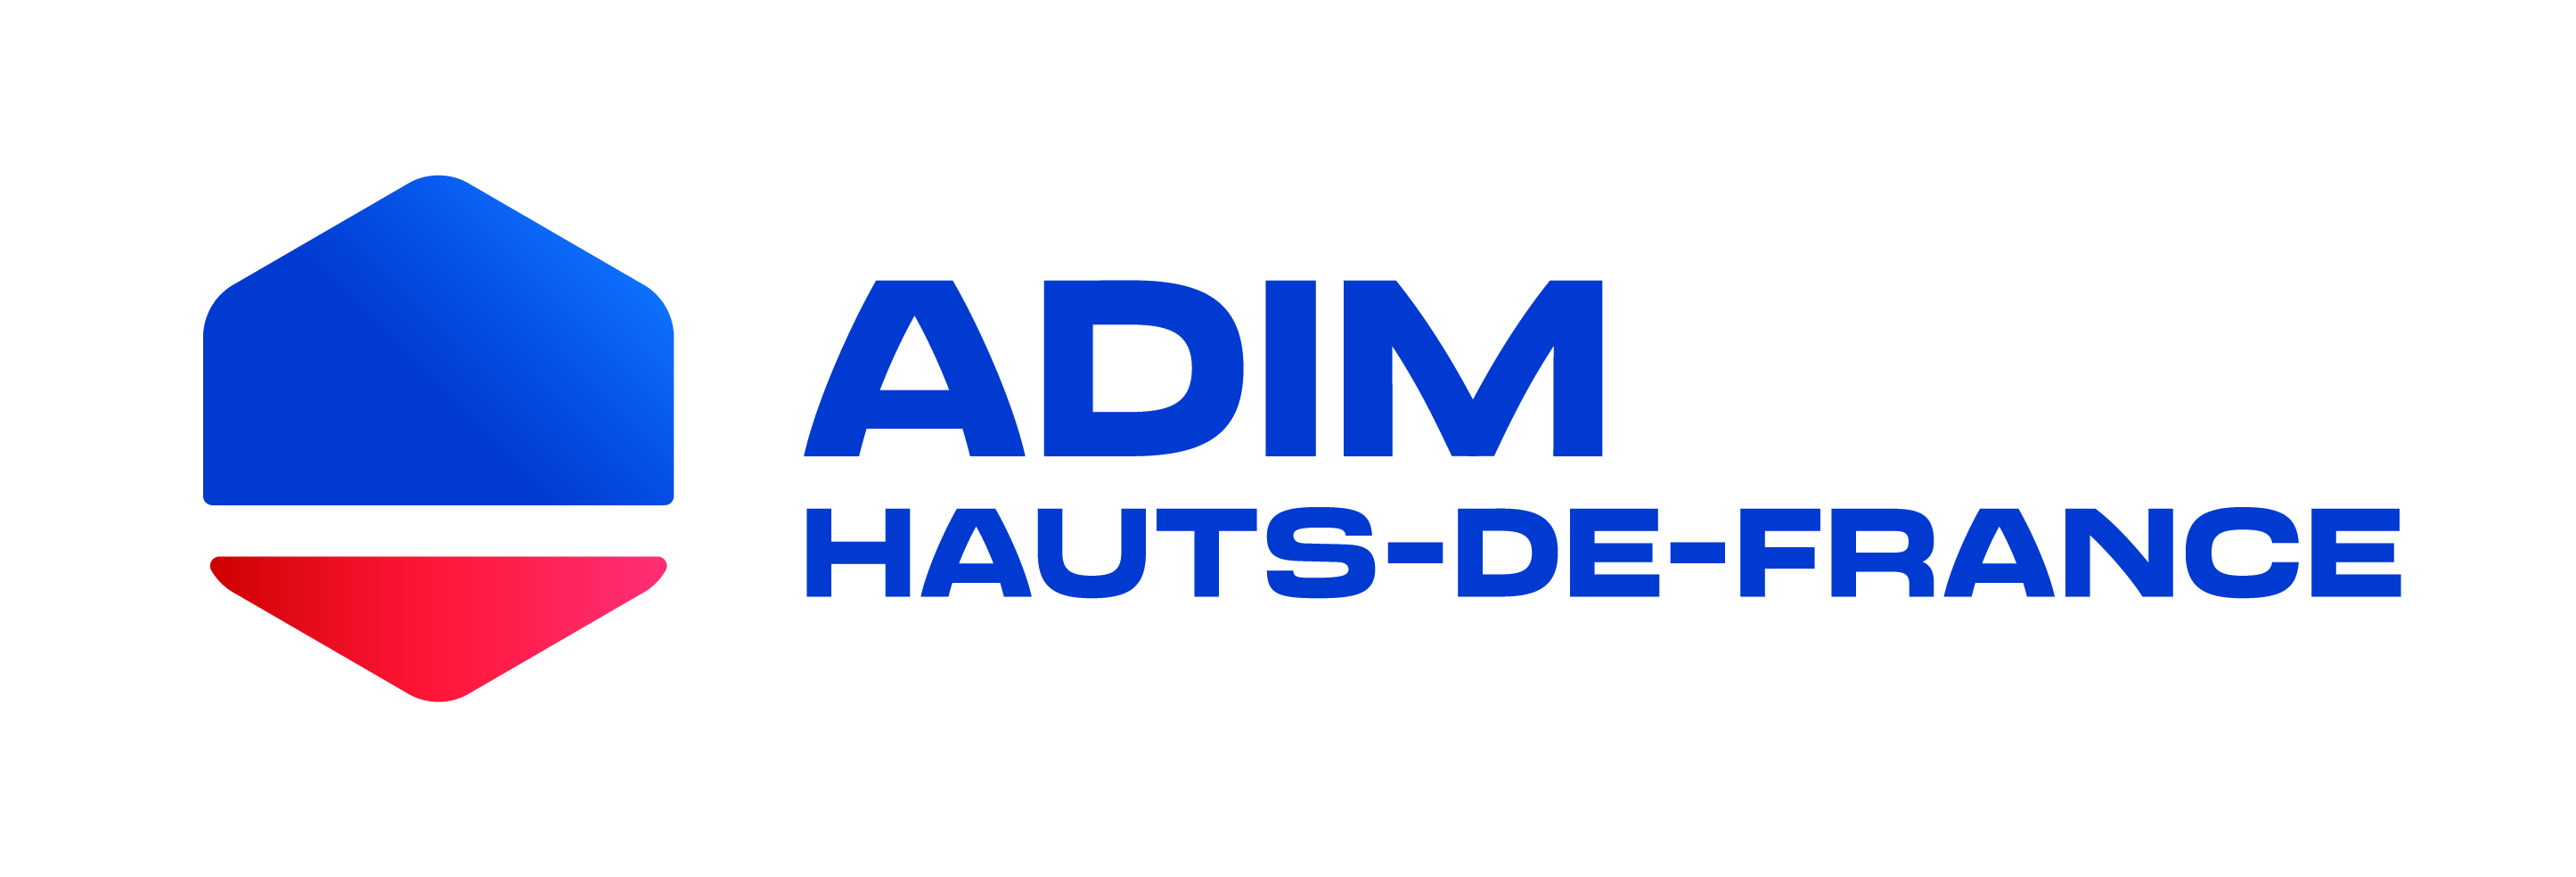 ADIM HAUTS-DE-FRANCE